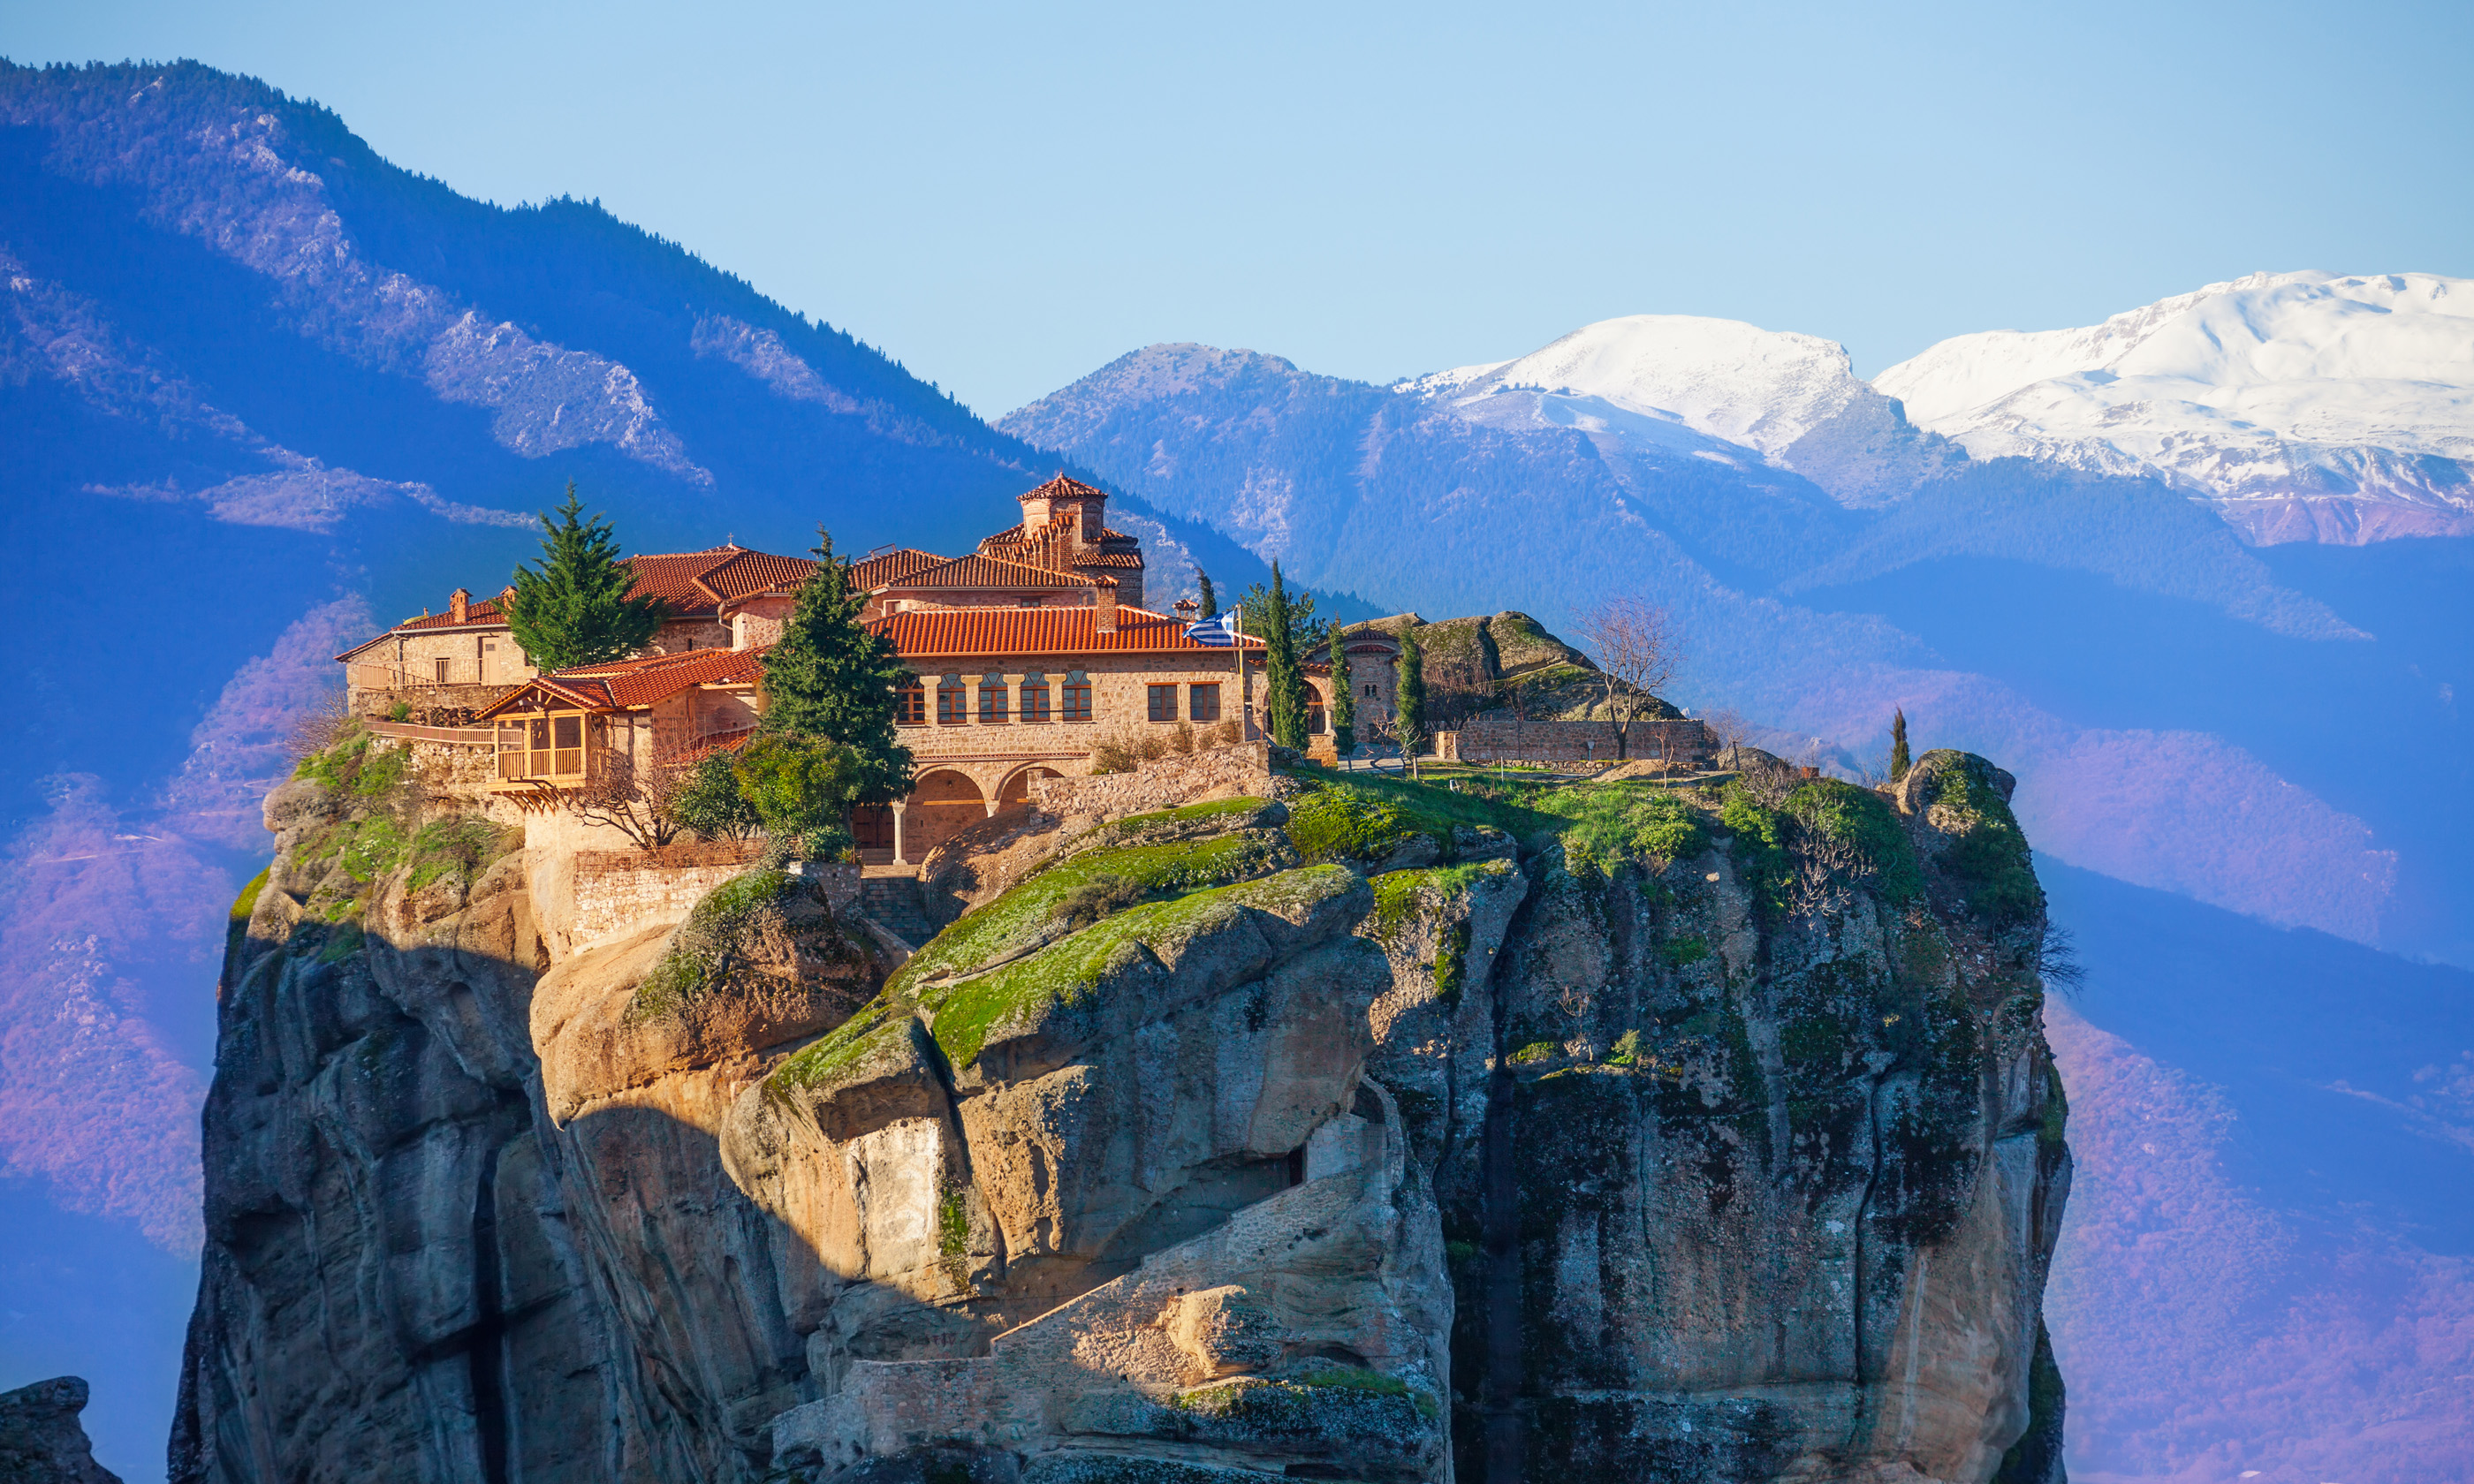 Mountain Monastery of the Holy Trinity (Shutterstock.com)